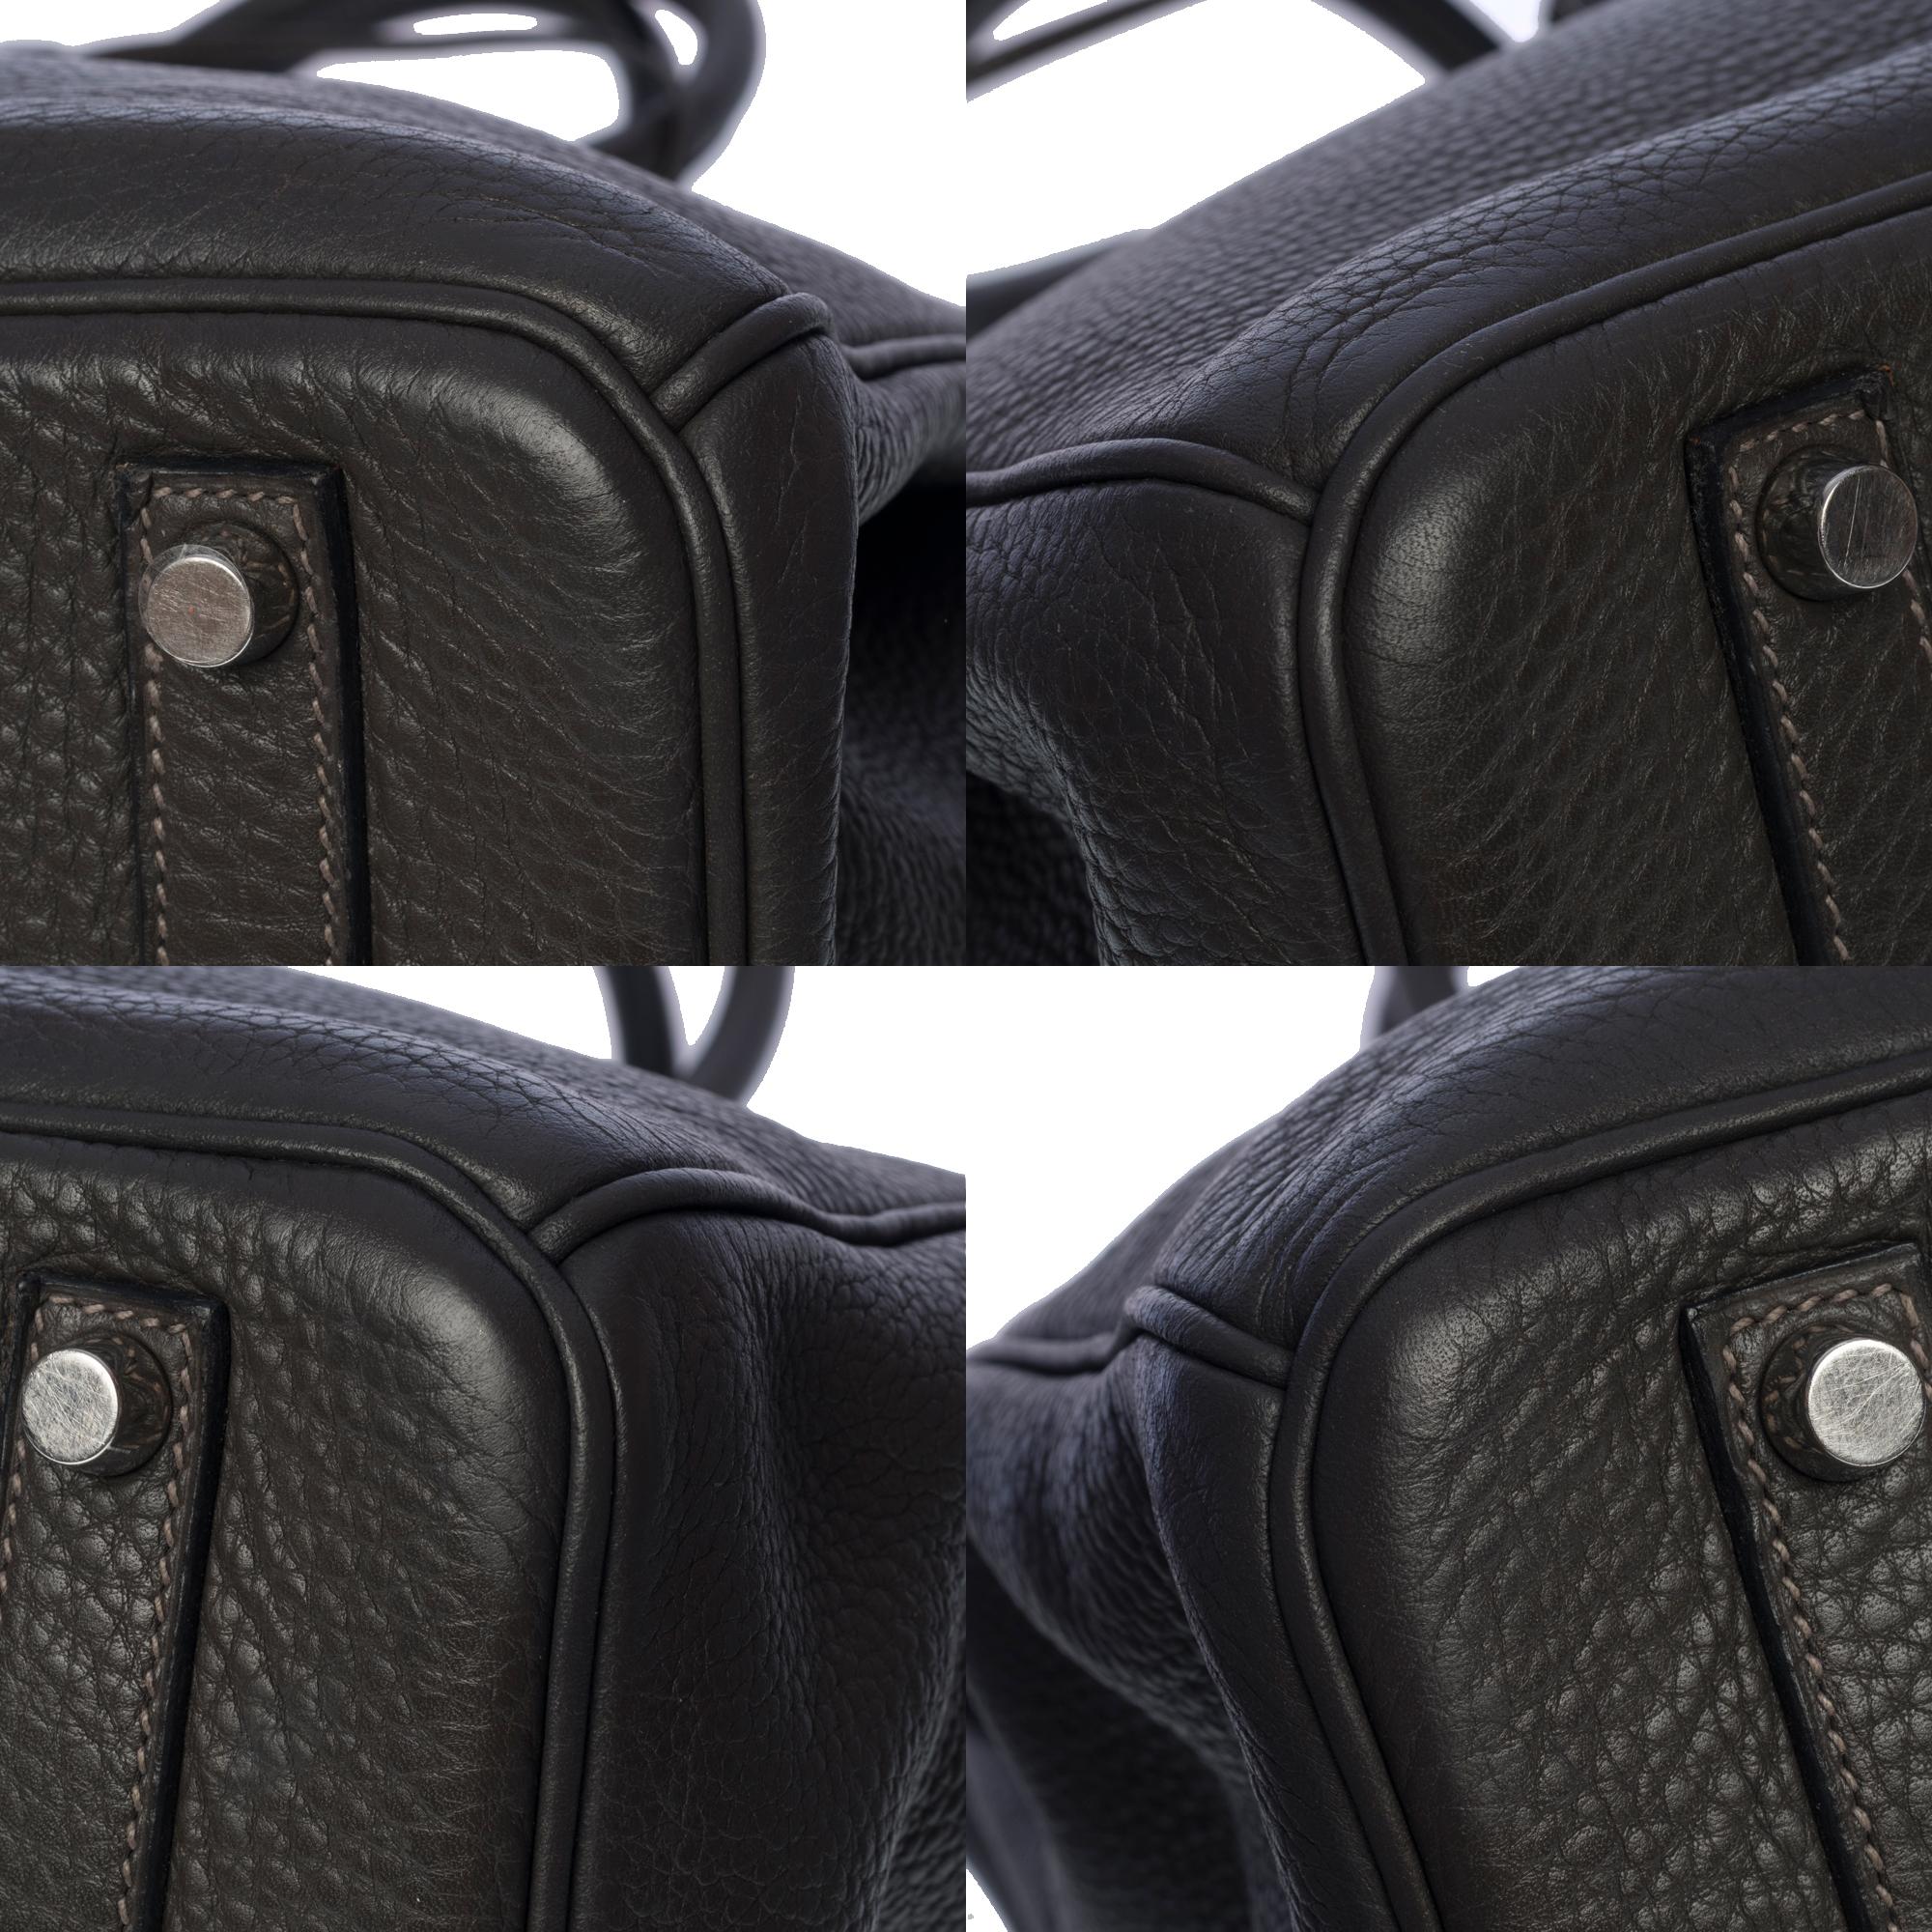 Amazing Hermès Birkin 35 handbag in Etain Togo leather, SHW 3